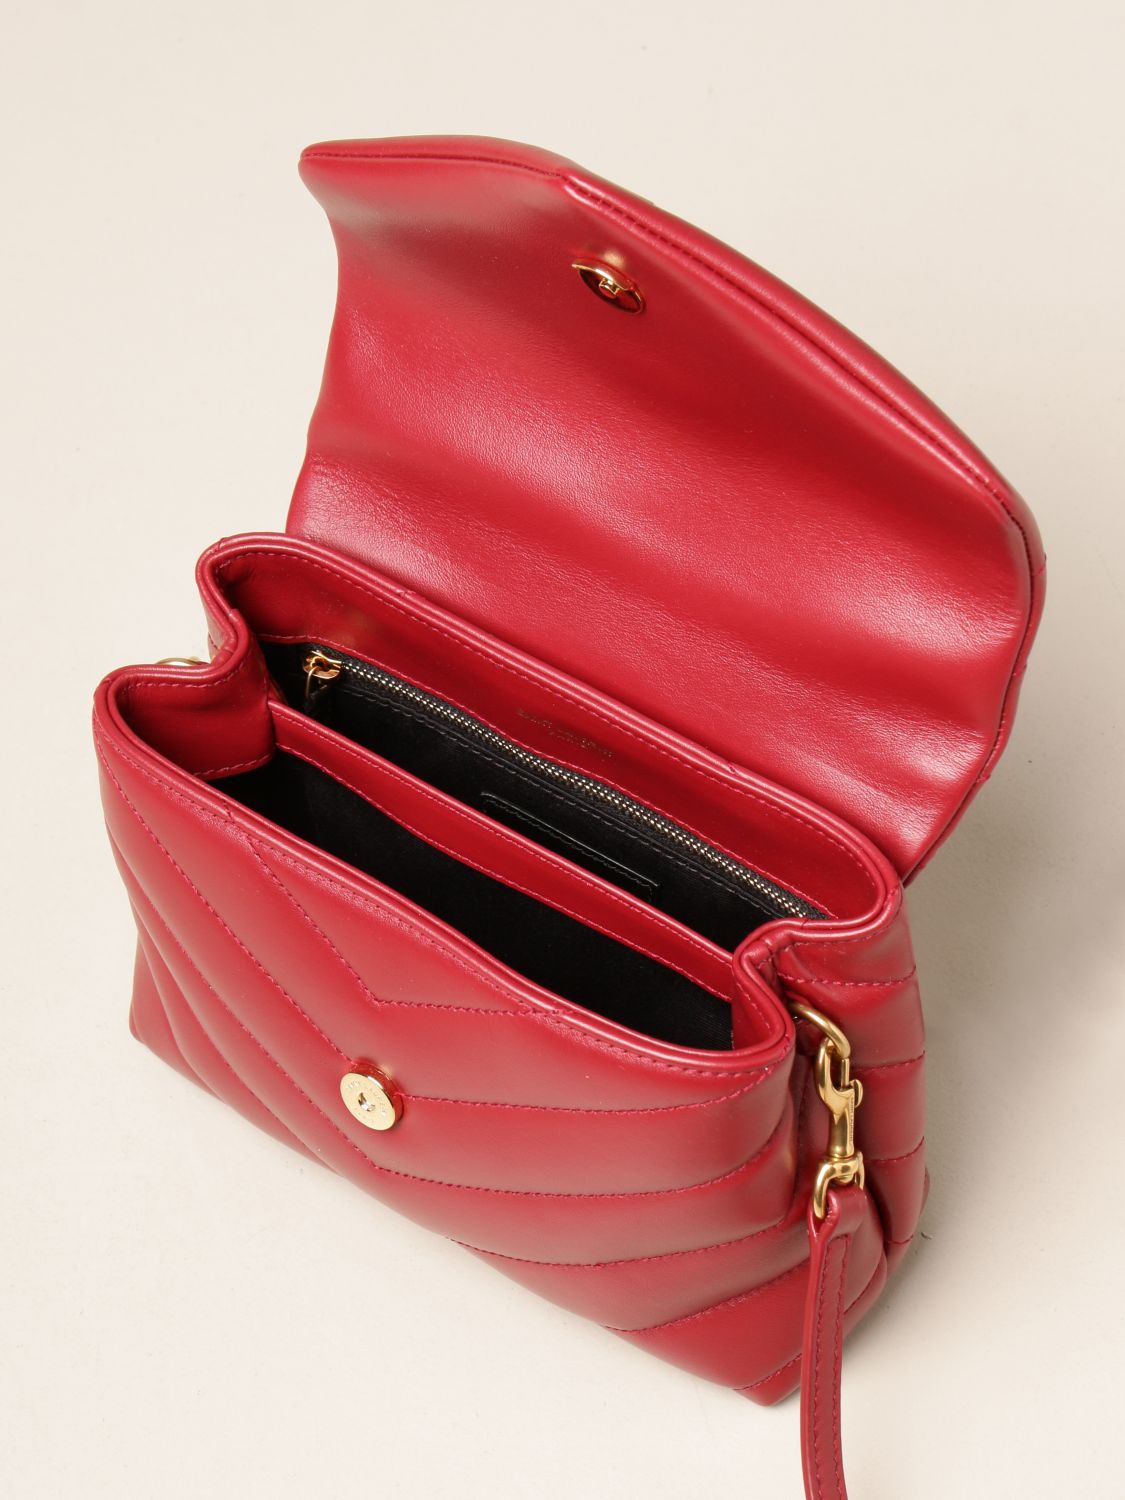 SAINT LAURENT: Loulou mini bag in quilted leather - Black  Saint Laurent  mini bag 630951 DV707 online at